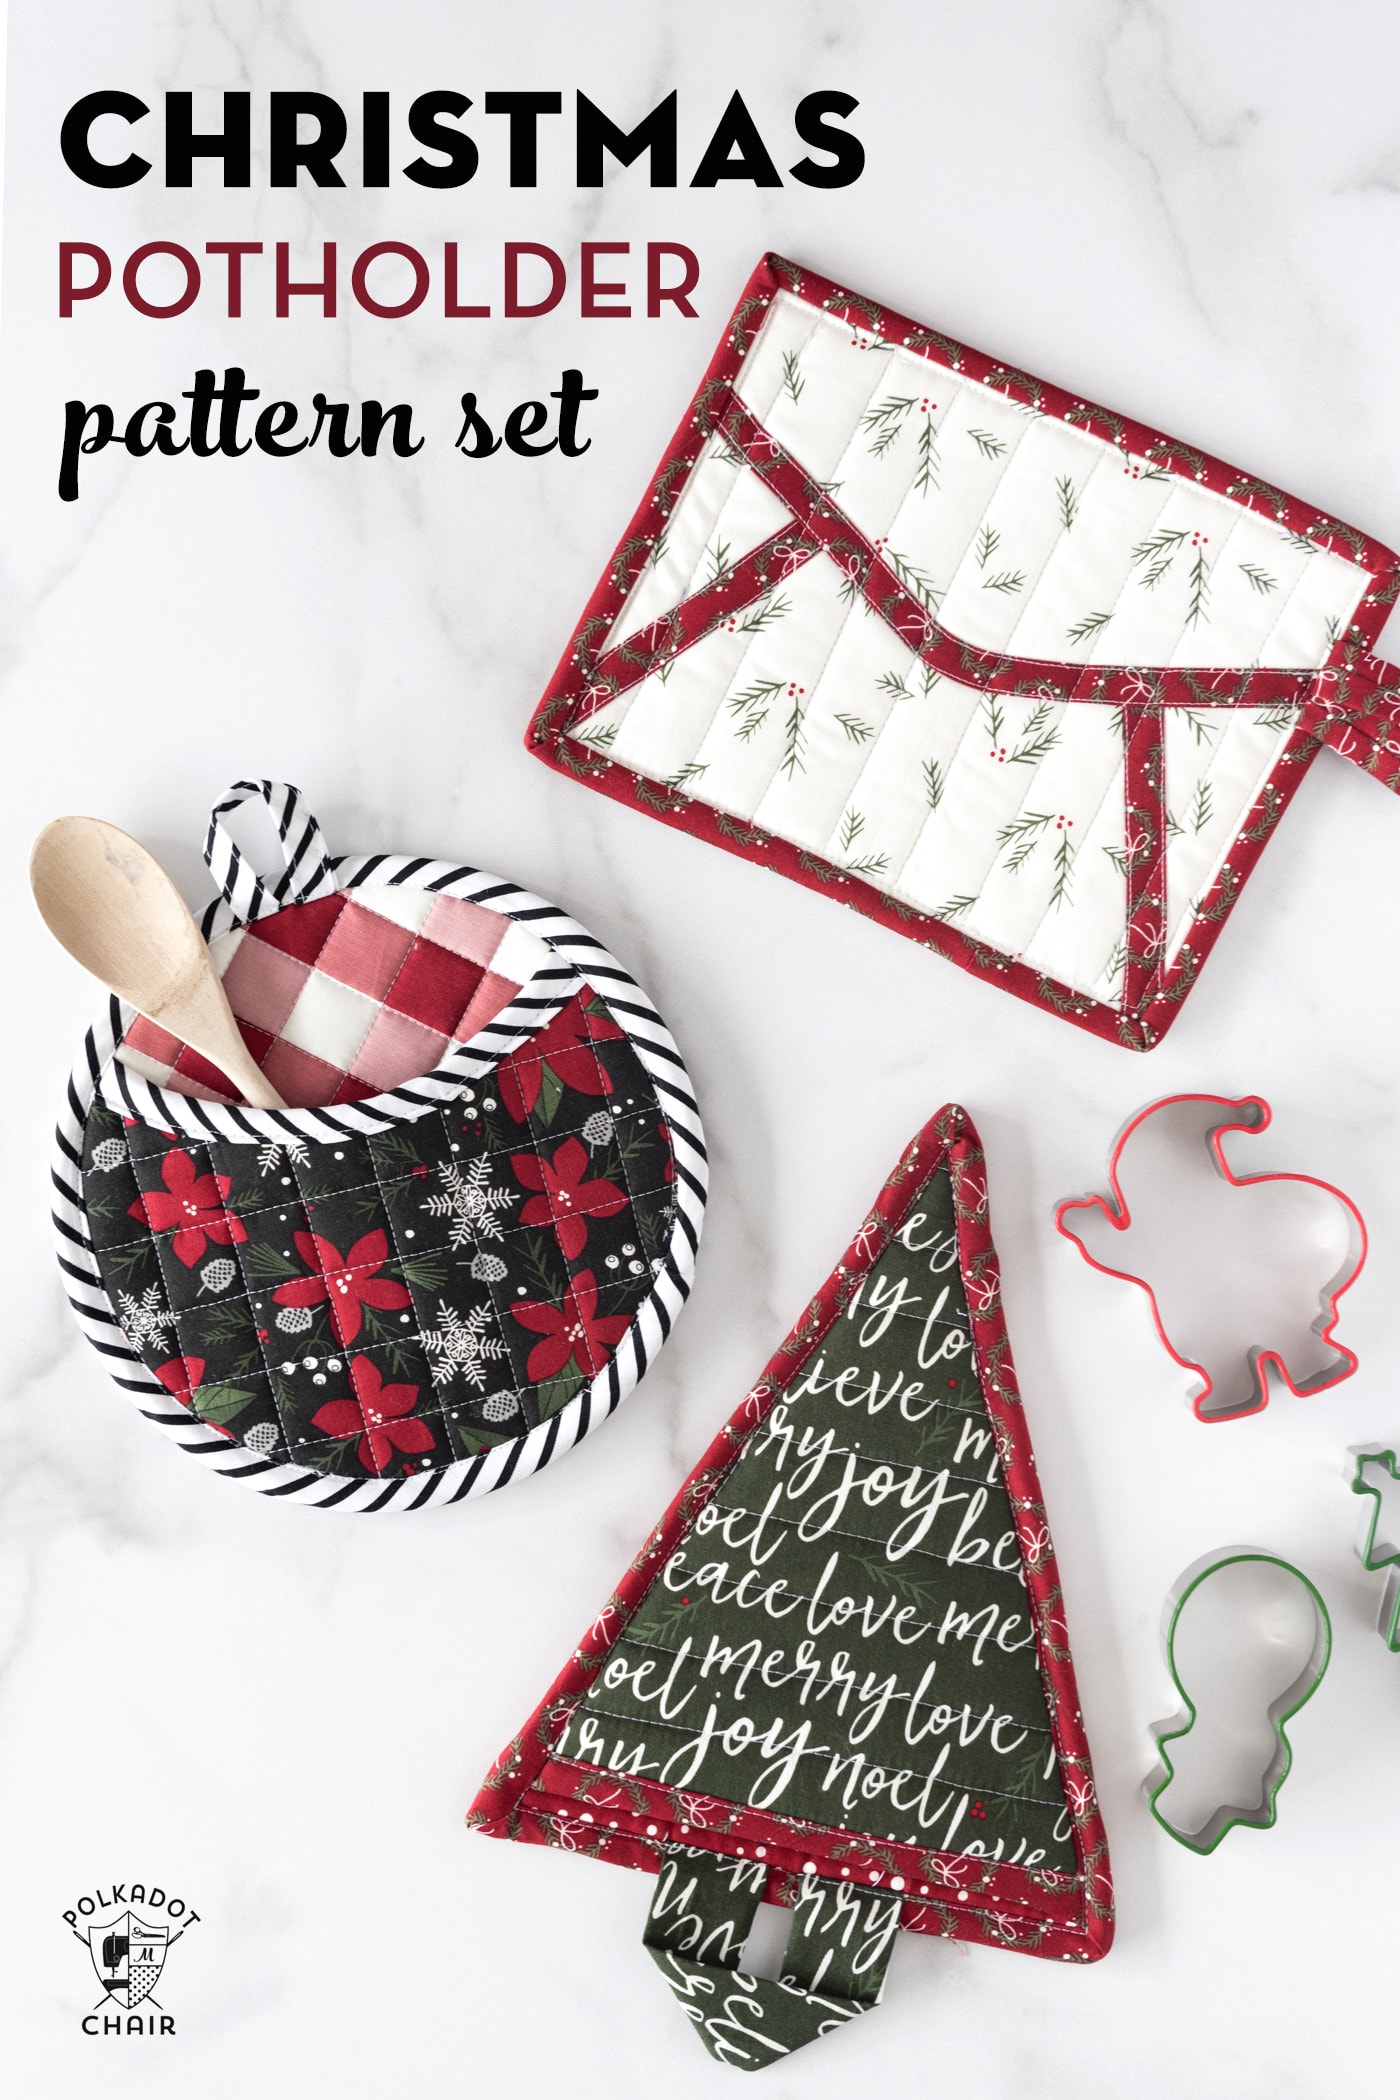 https://www.polkadotchair.com/wp-content/uploads/2019/12/Christmas-potholder-pattern-set.jpg